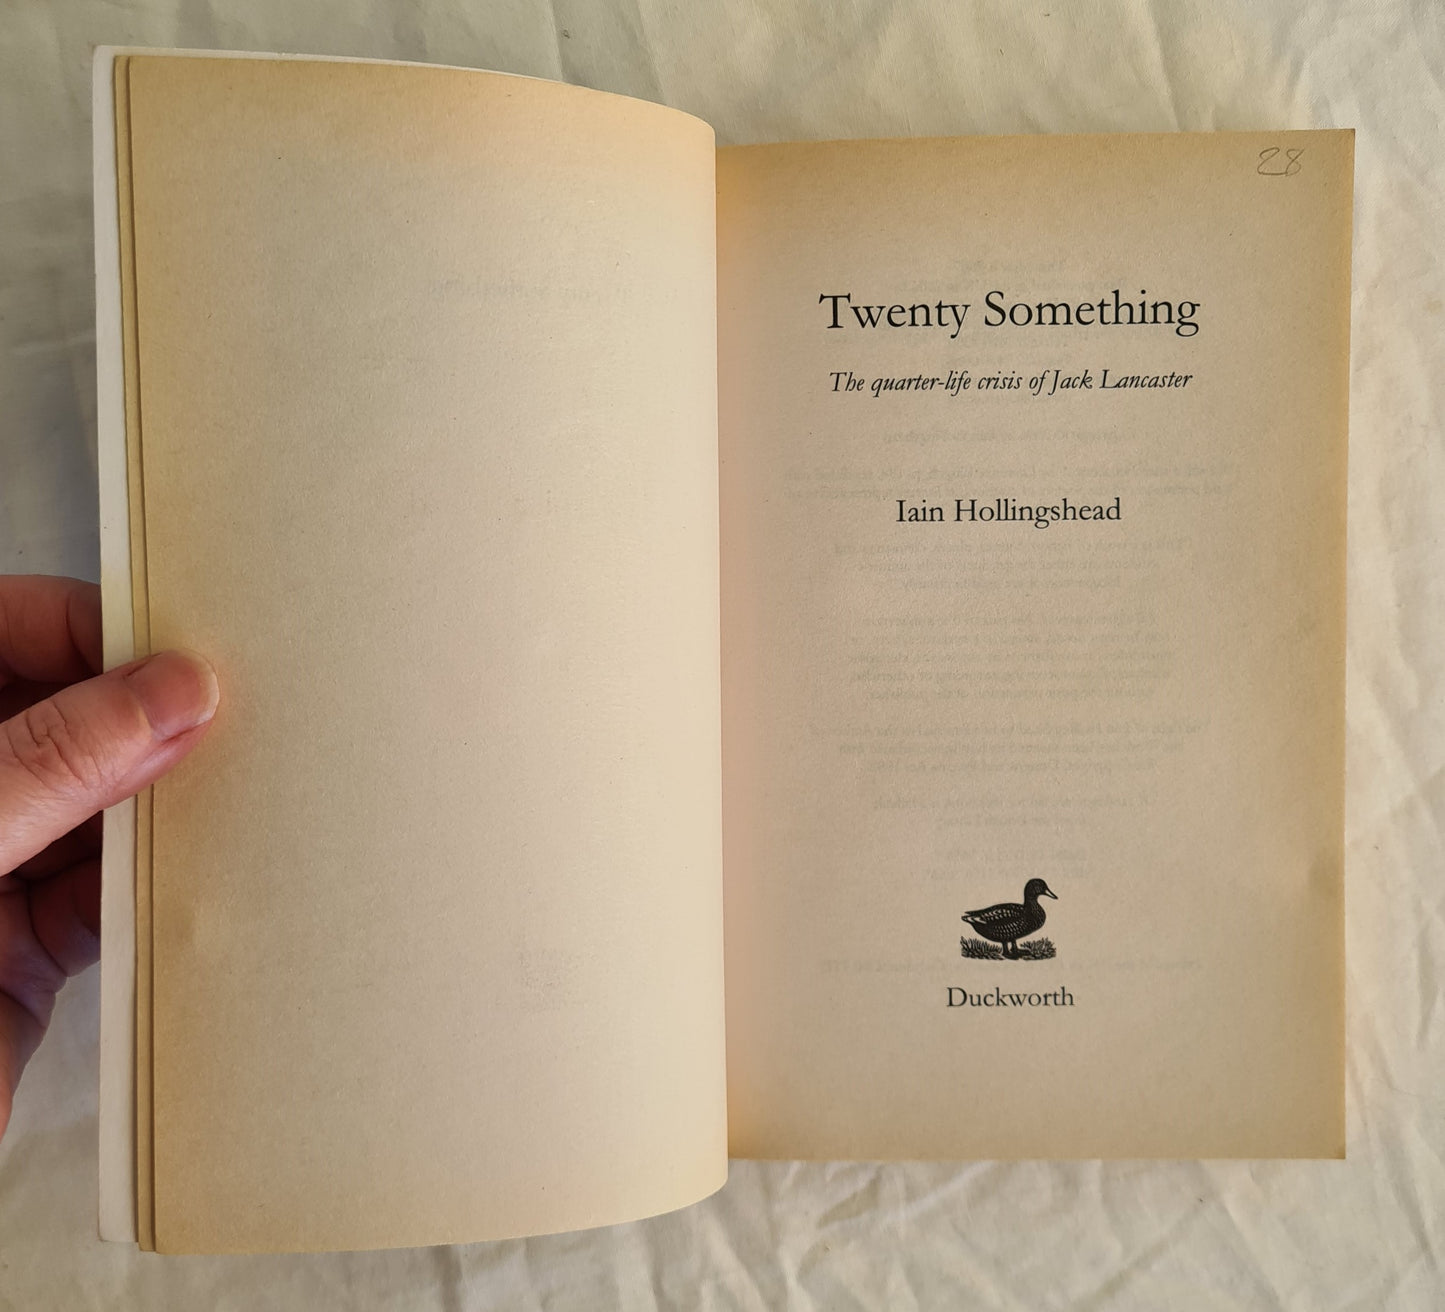 Twenty Something by Iain Hollingshead